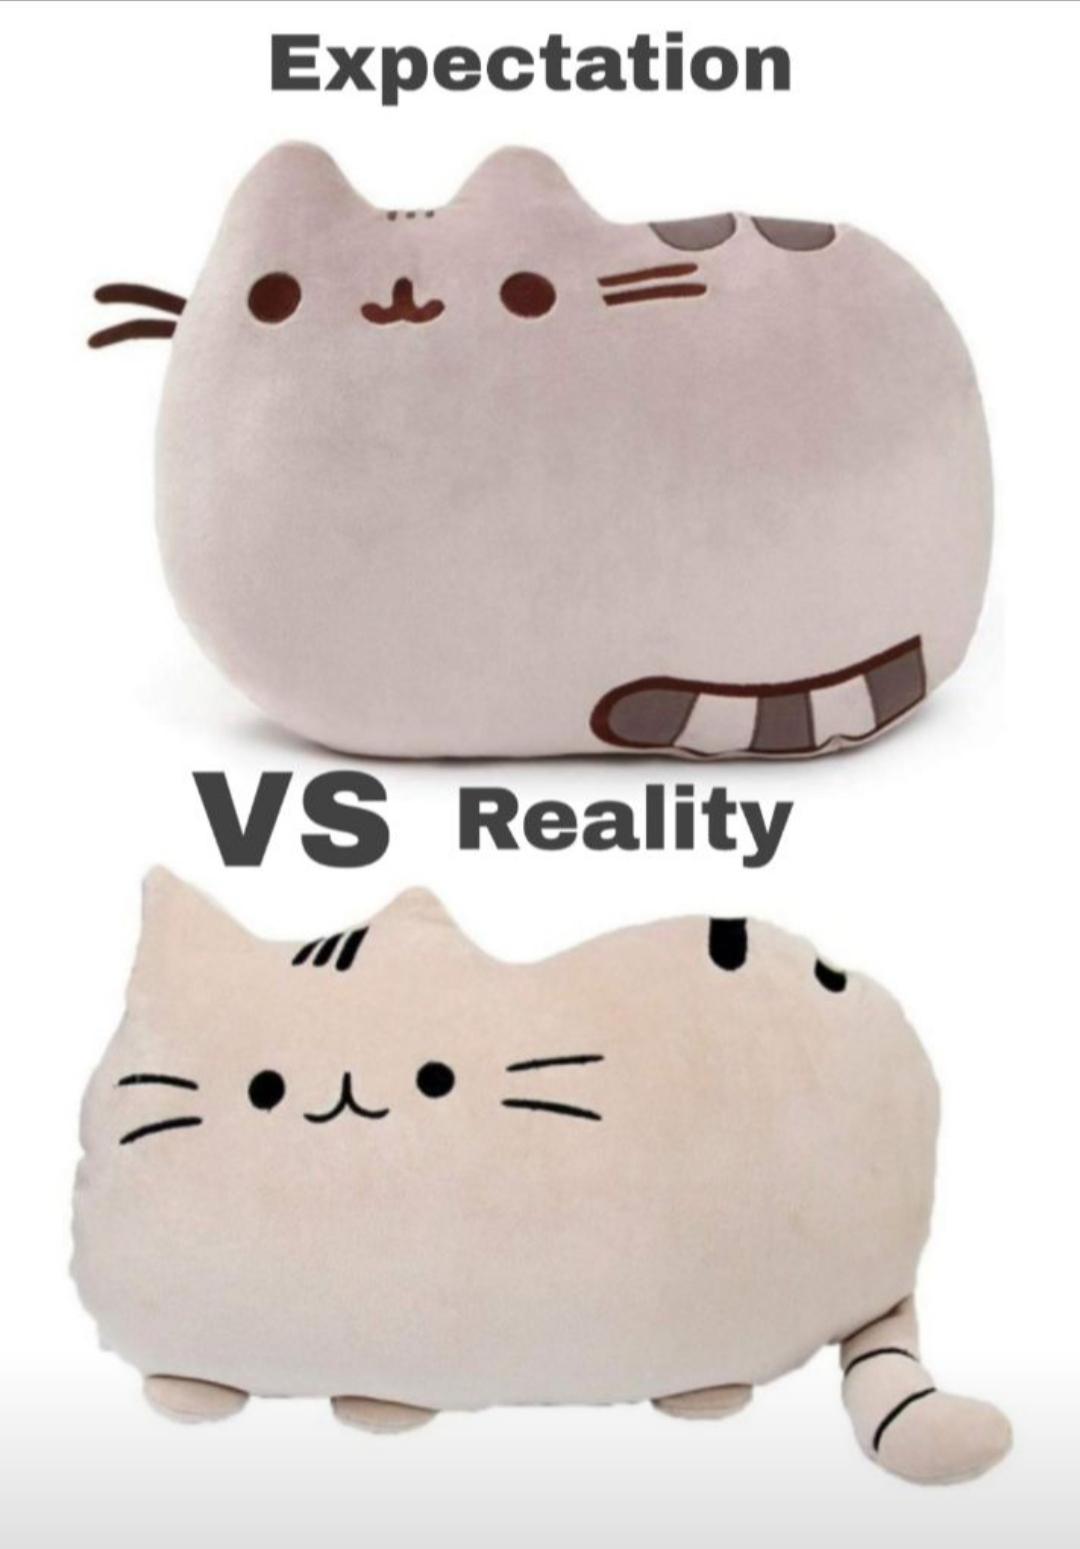 pusheen cat stuffed animal - Expectation Vs Reality . .